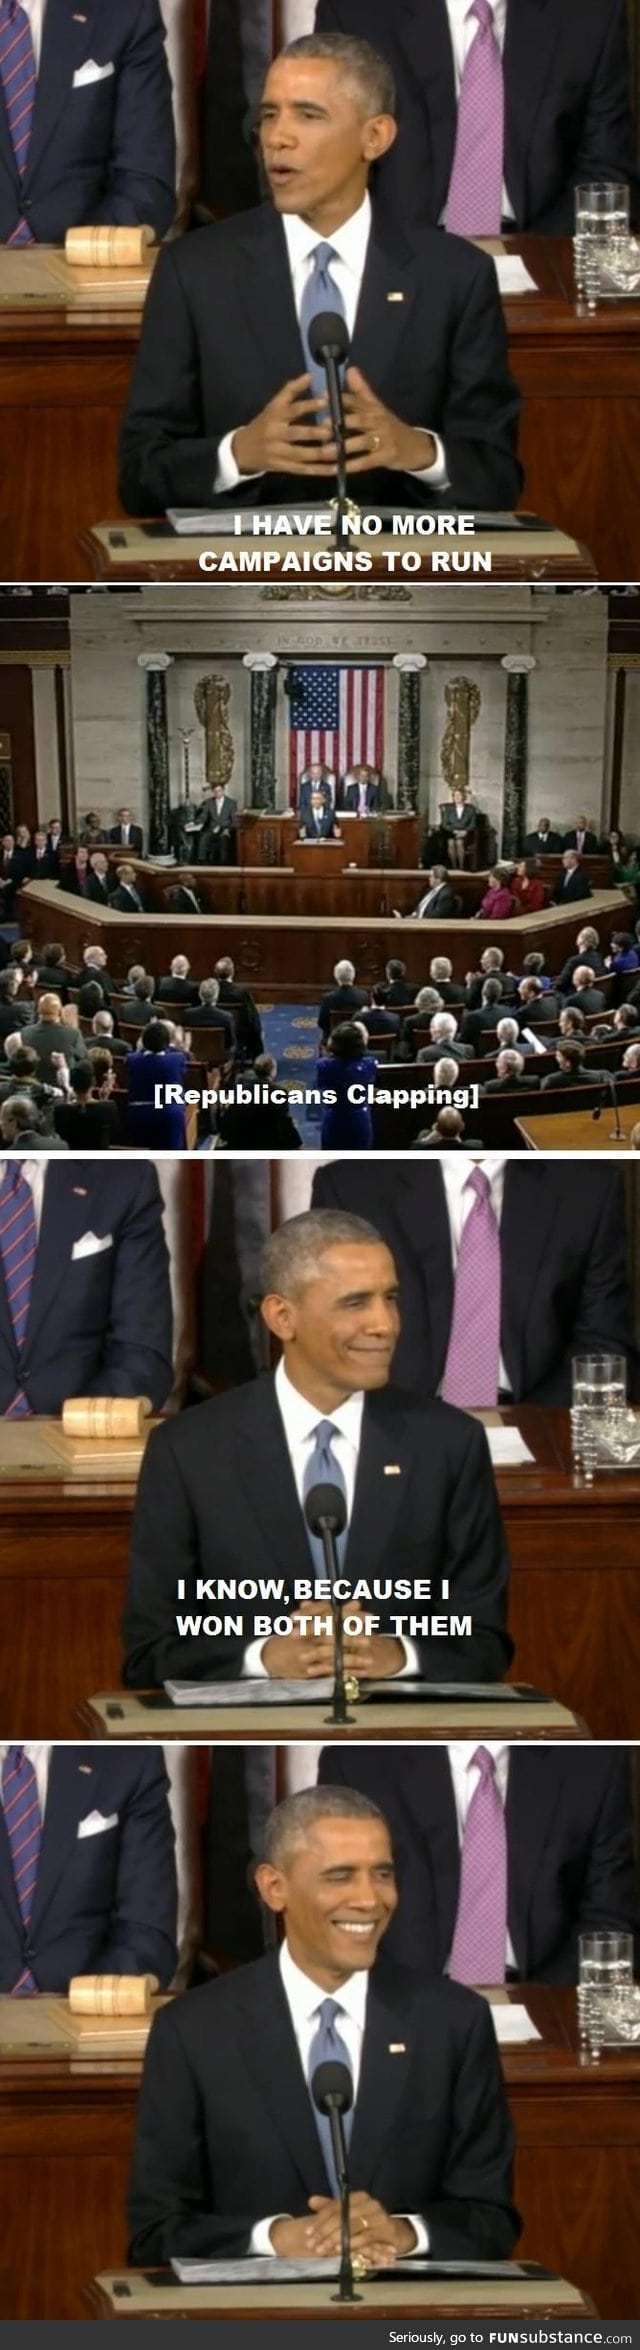 Obama trolls Congress